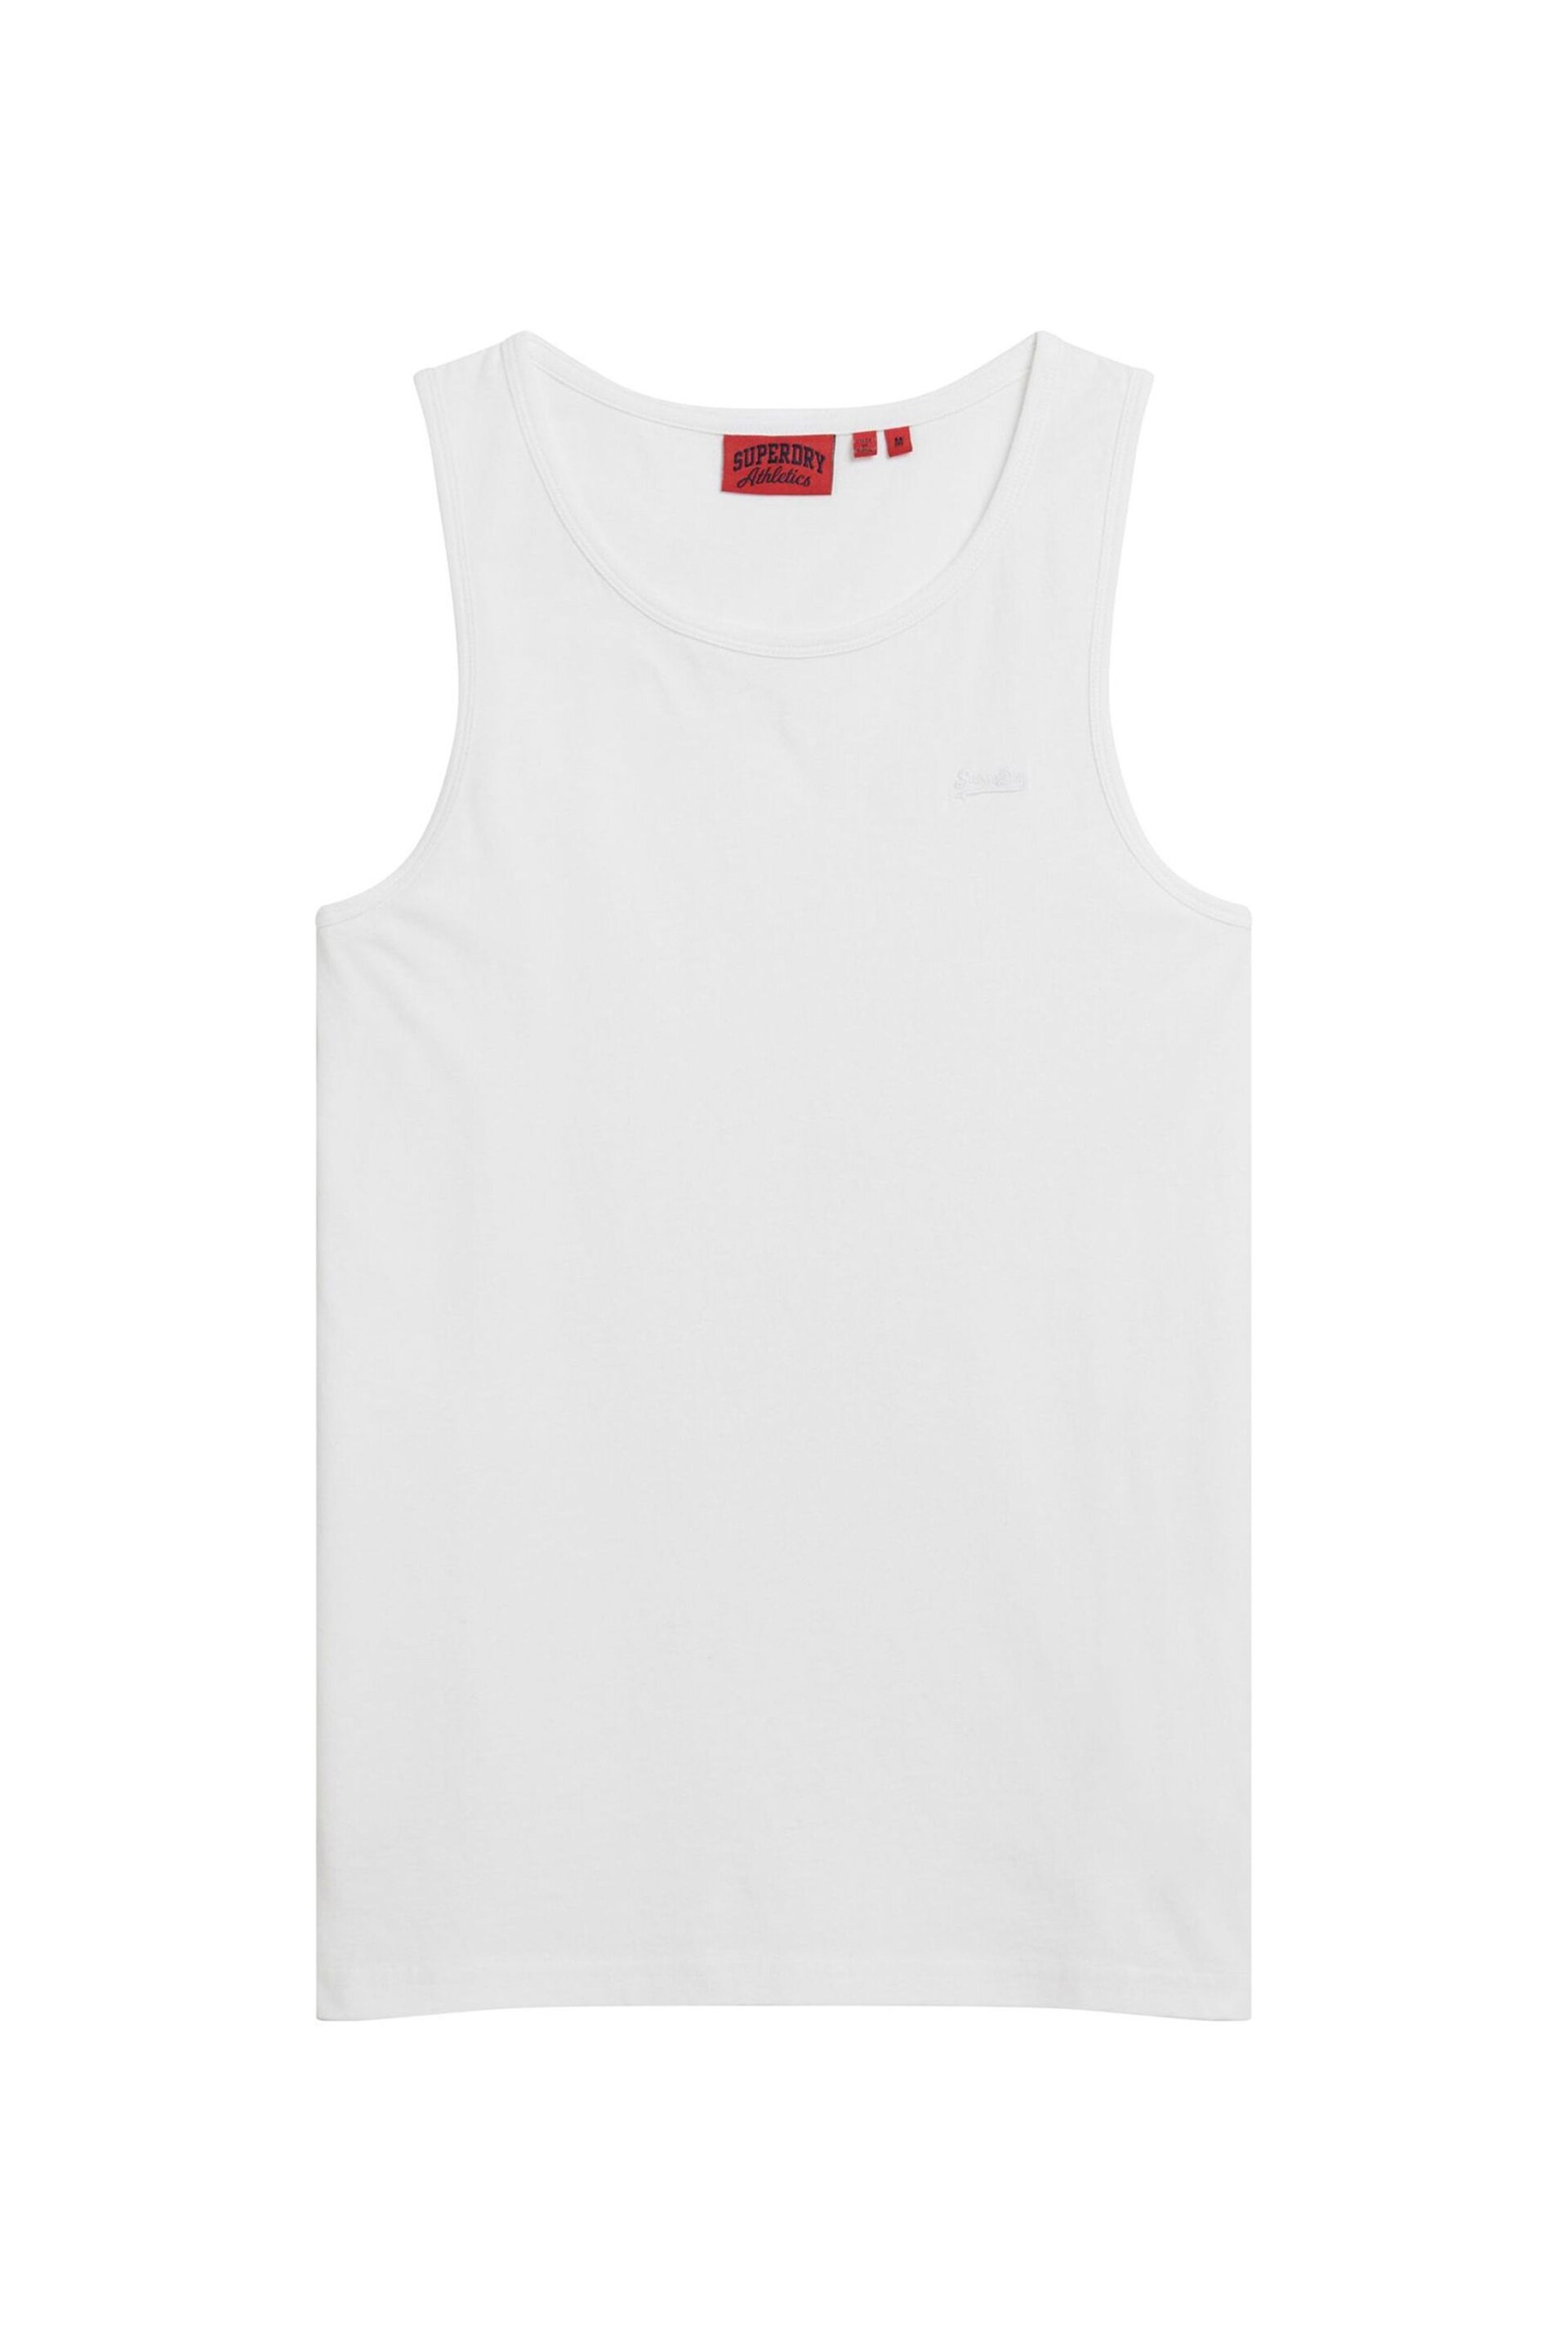 Superdry White Essential Logo Vest - Image 5 of 5